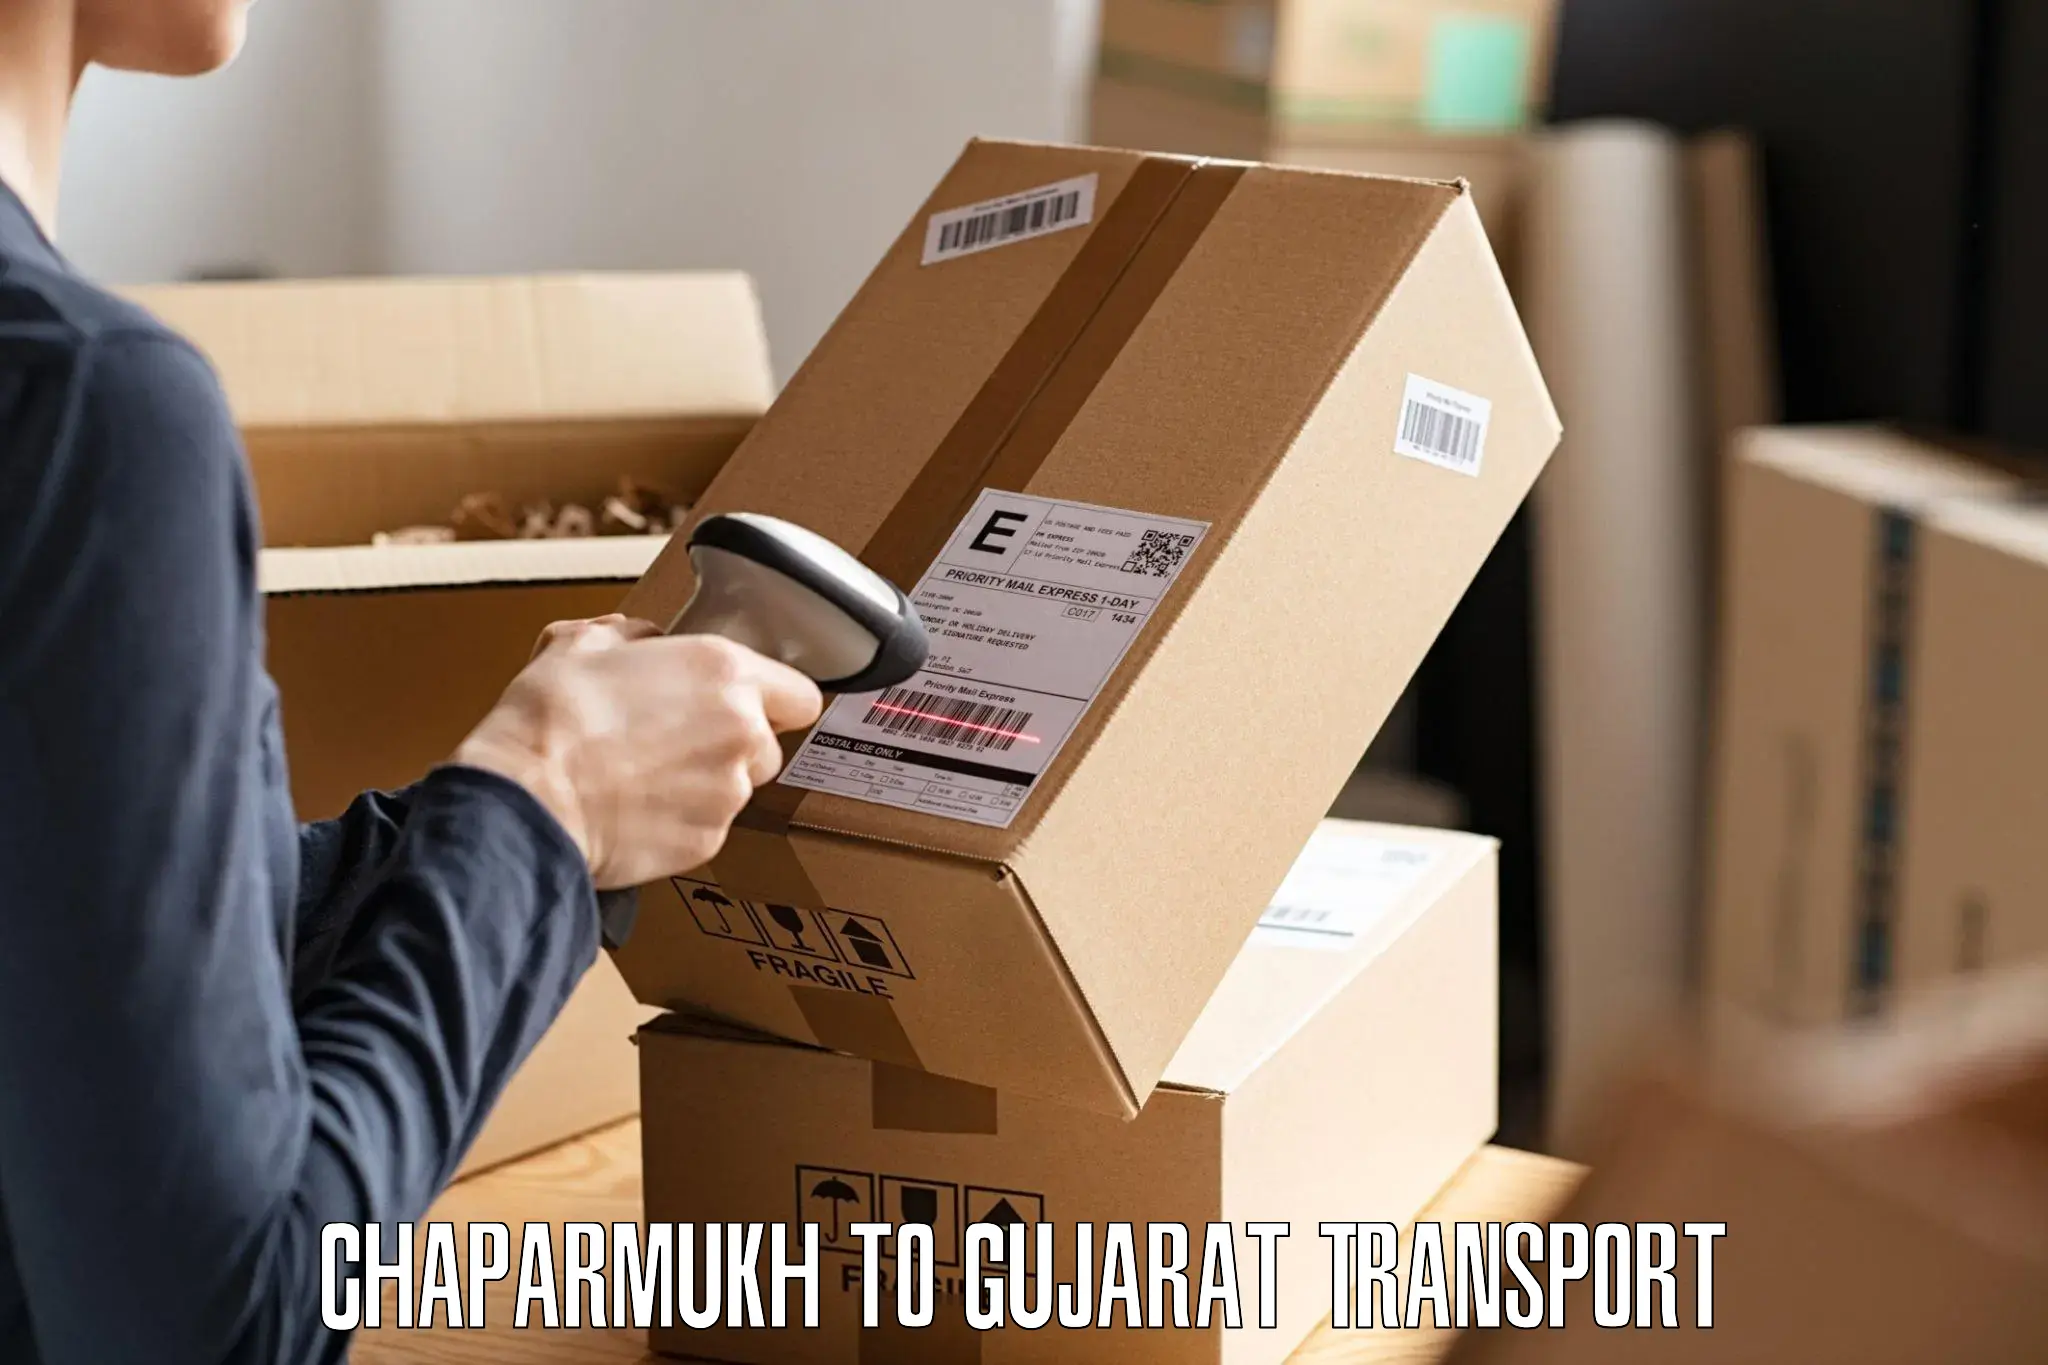 Cargo train transport services Chaparmukh to Banaskantha